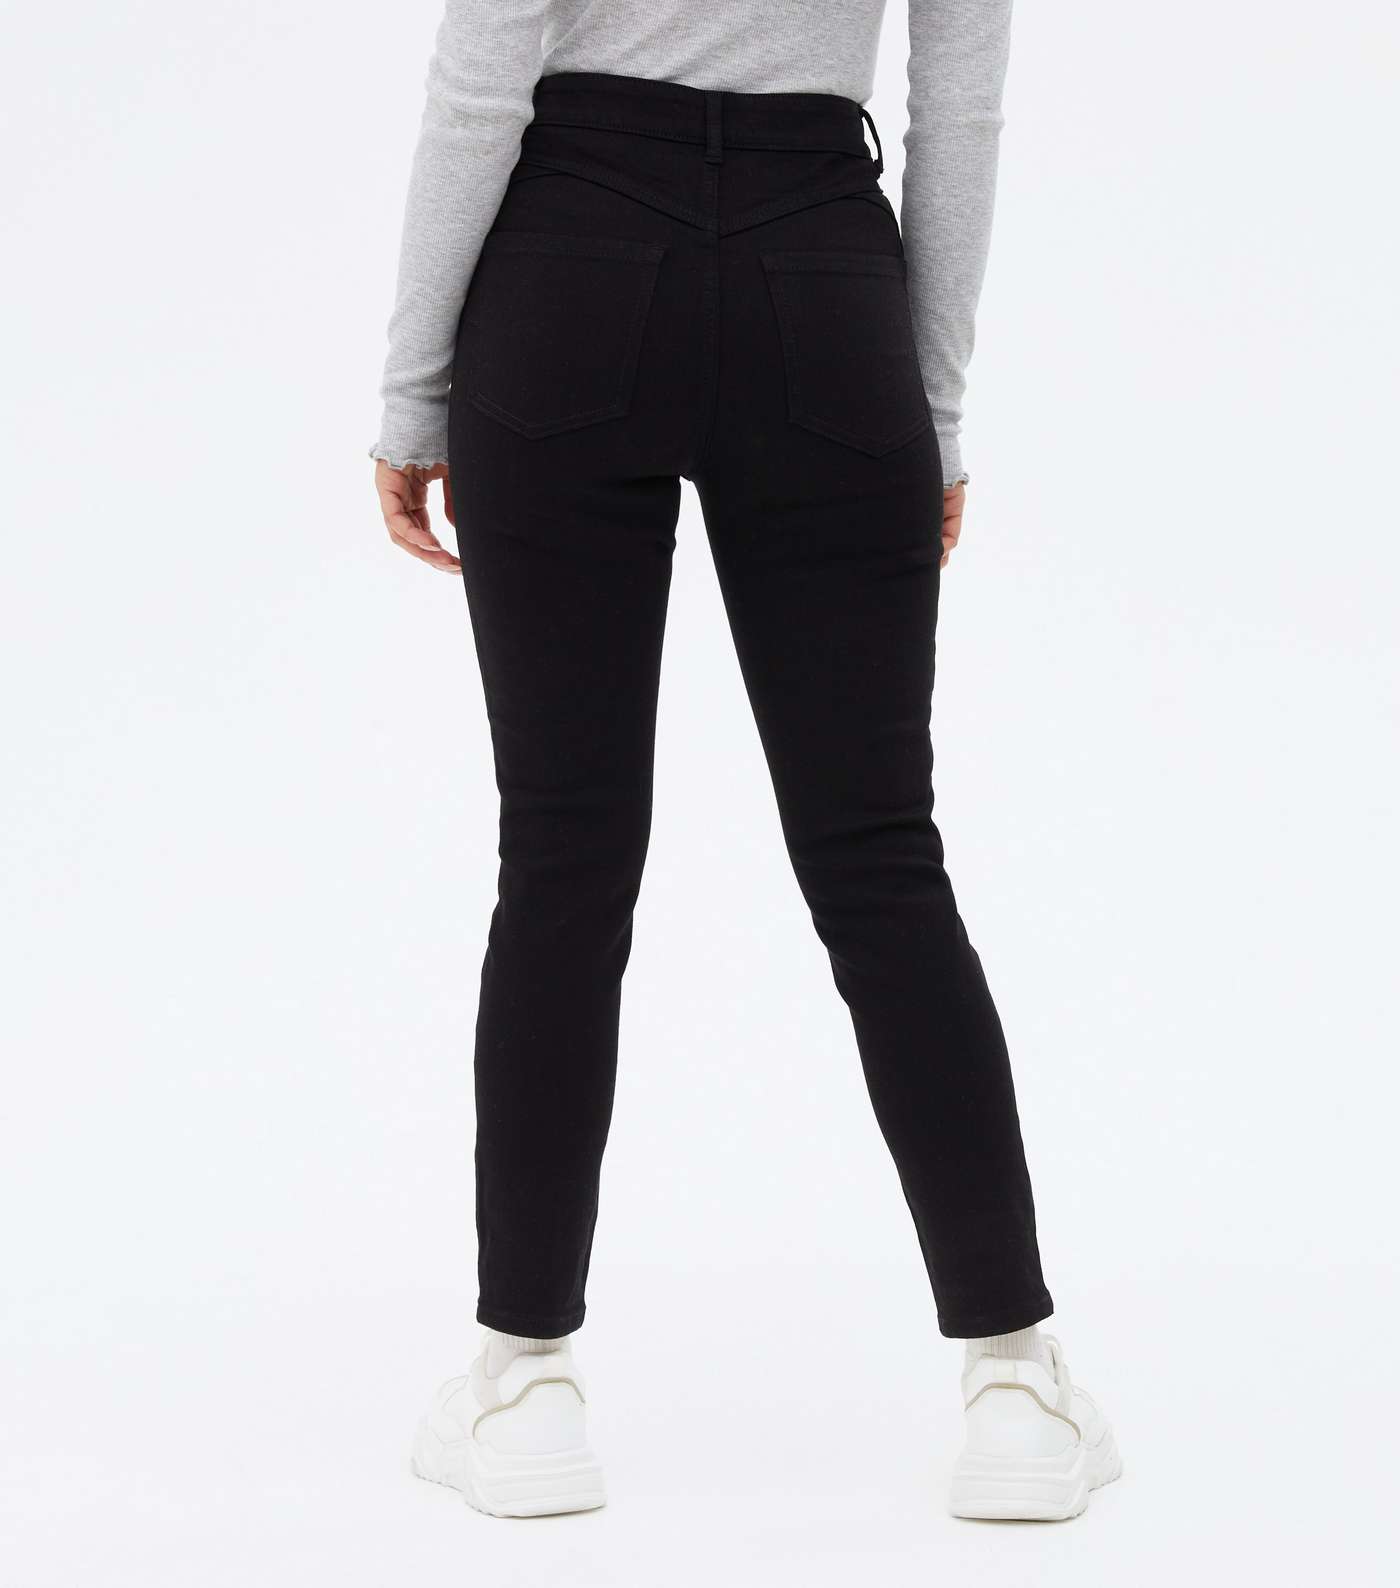 Petite Black Dark Wash Lift & Shape Jenna Skinny Jeans Image 4